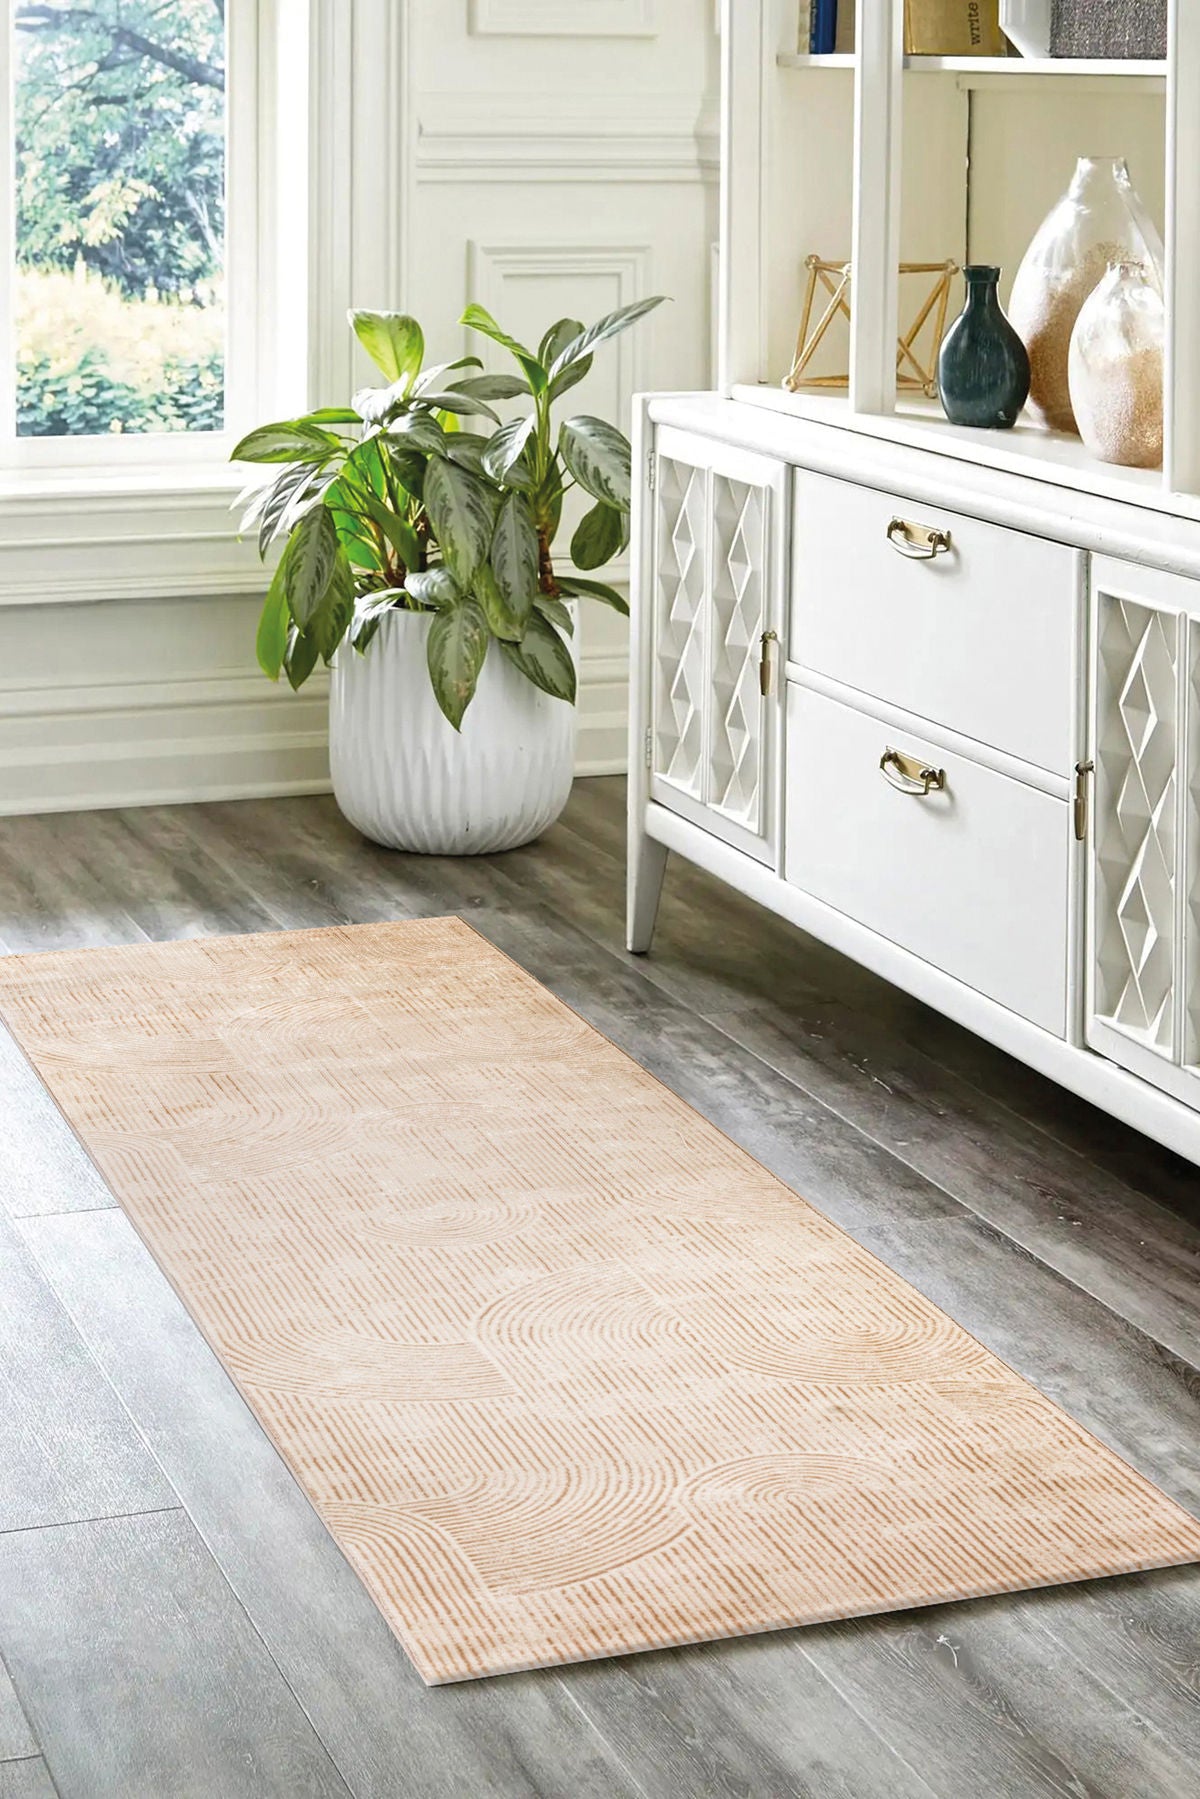 Moda 1120 - Carpet (100 x 200)